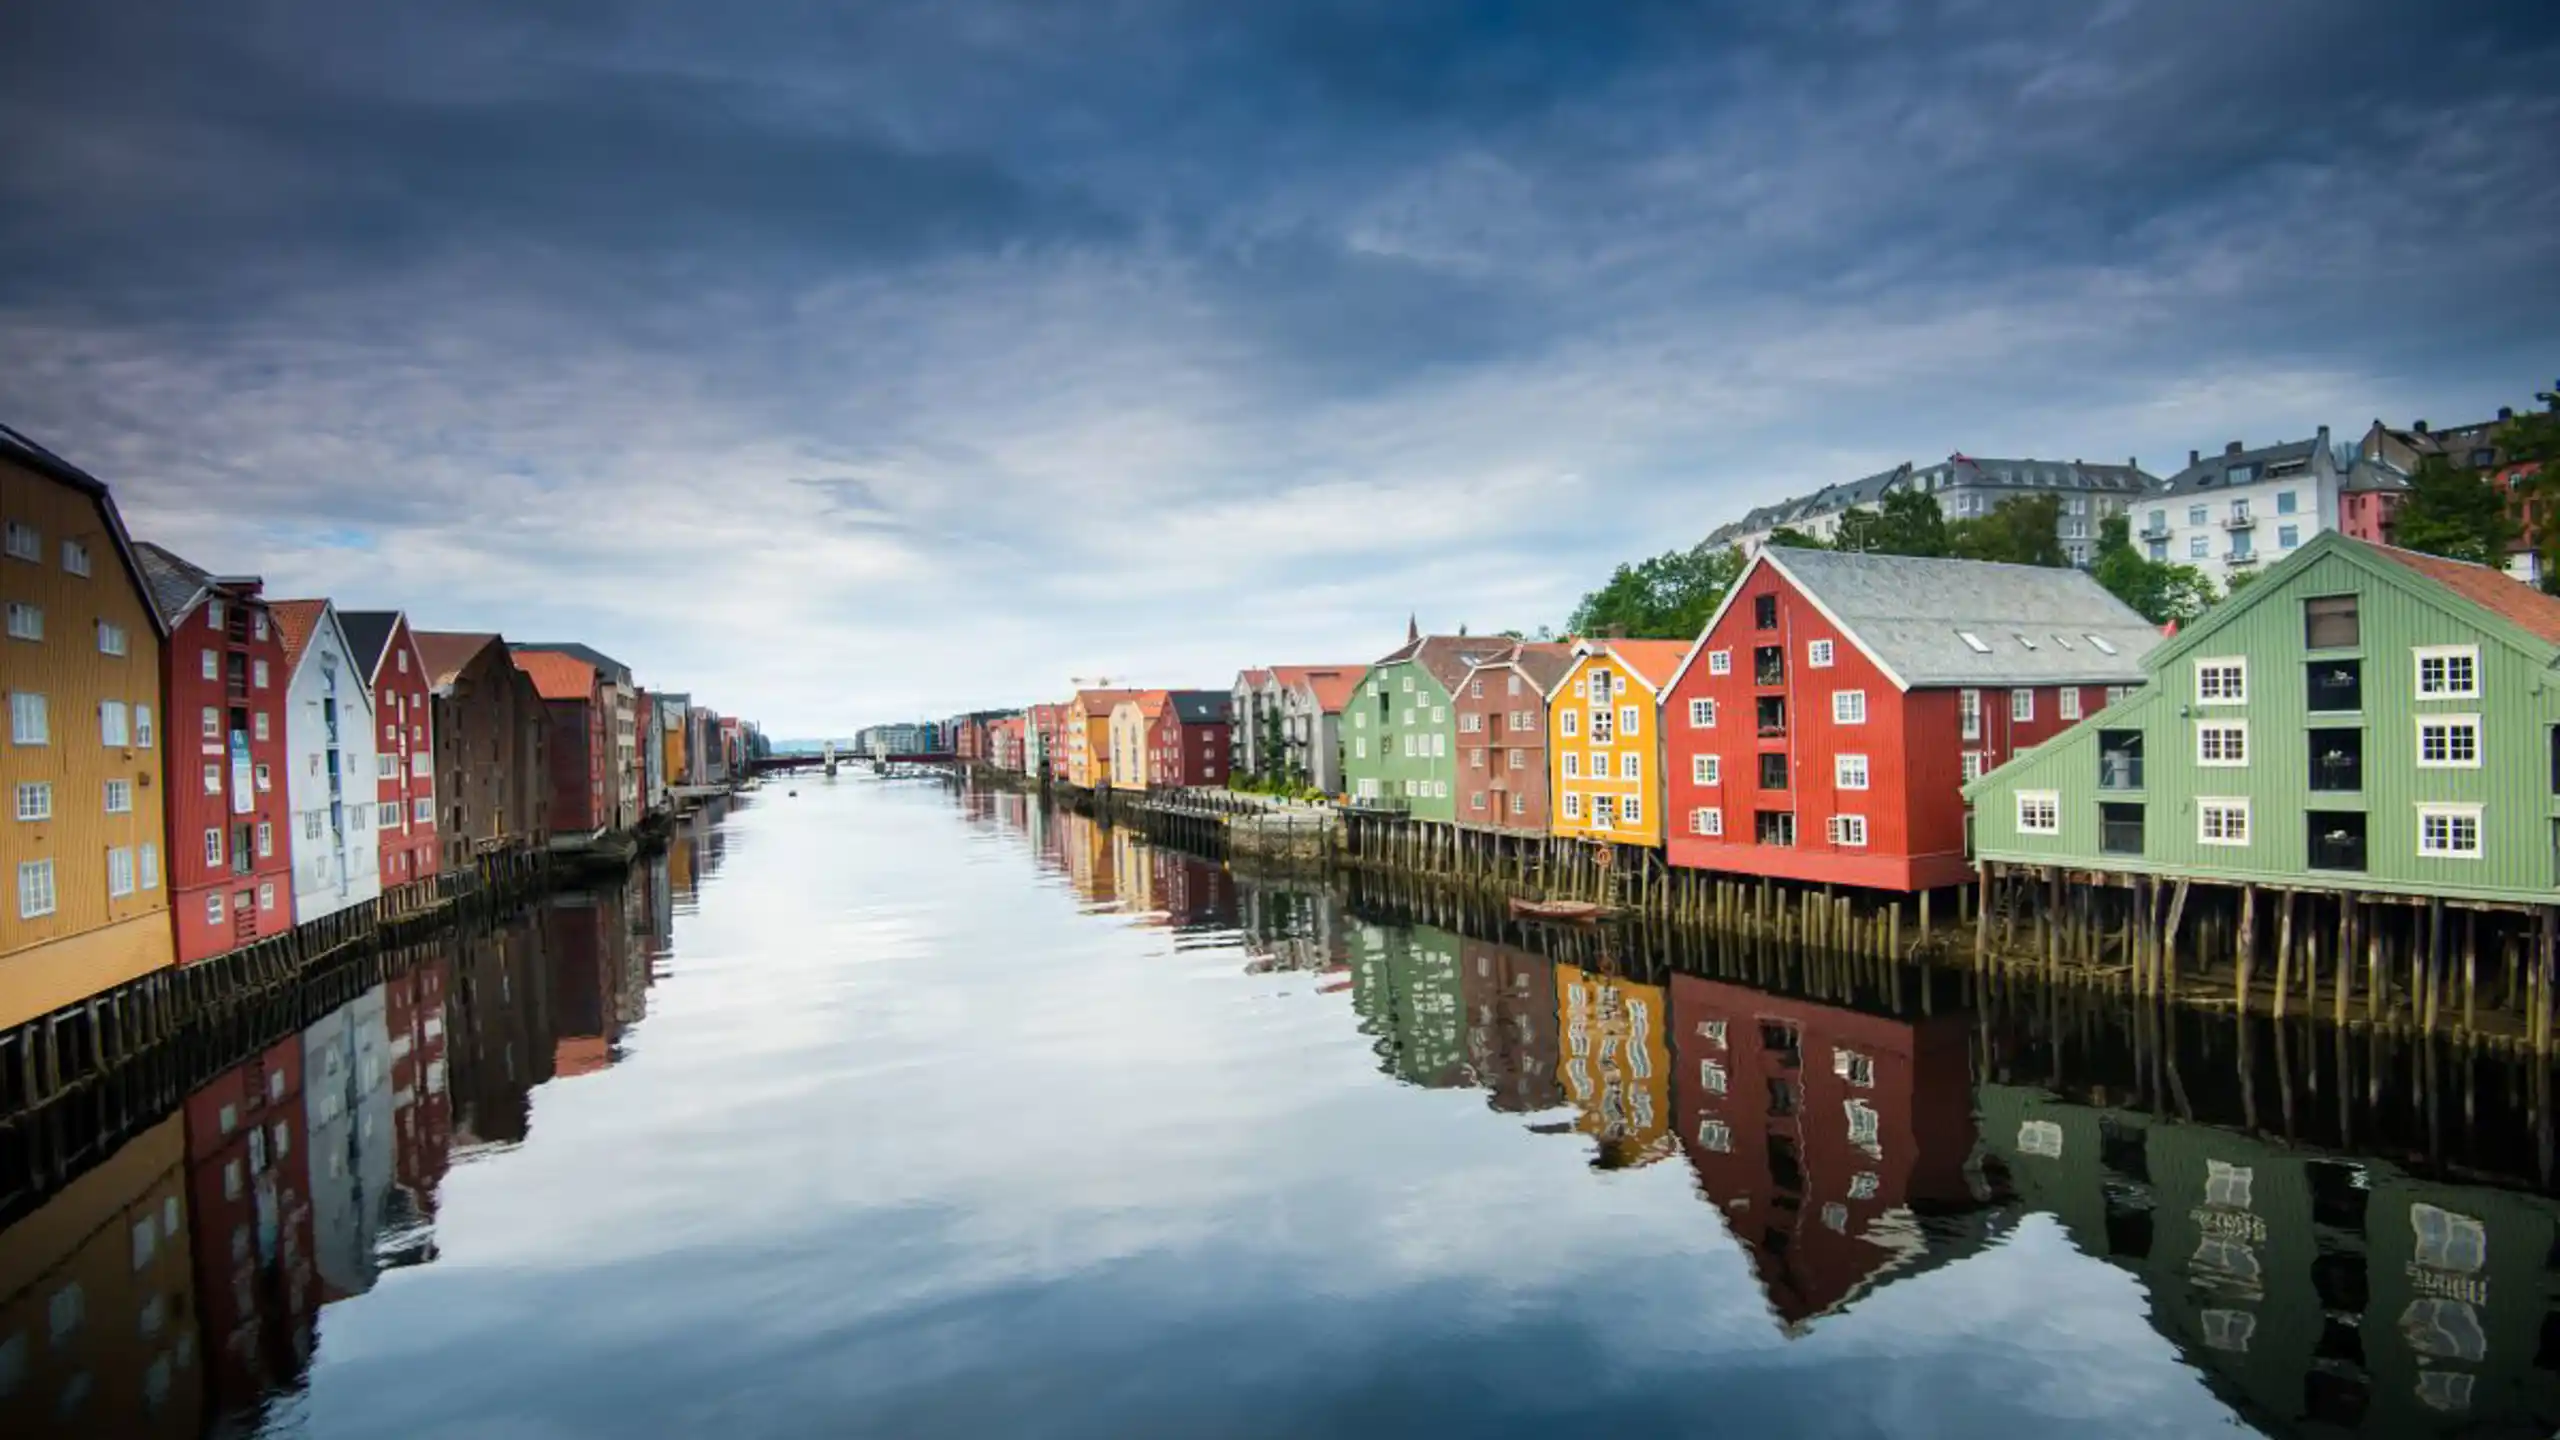 Trondheim City In Norway 2023 11 27 05 17 21 Utc (1)